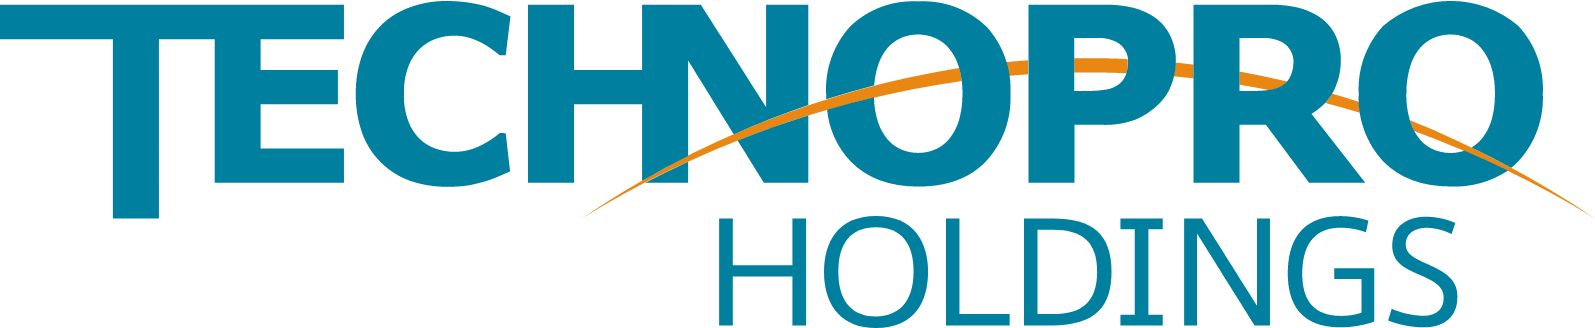 TechnoPro Holdings logo large (transparent PNG)